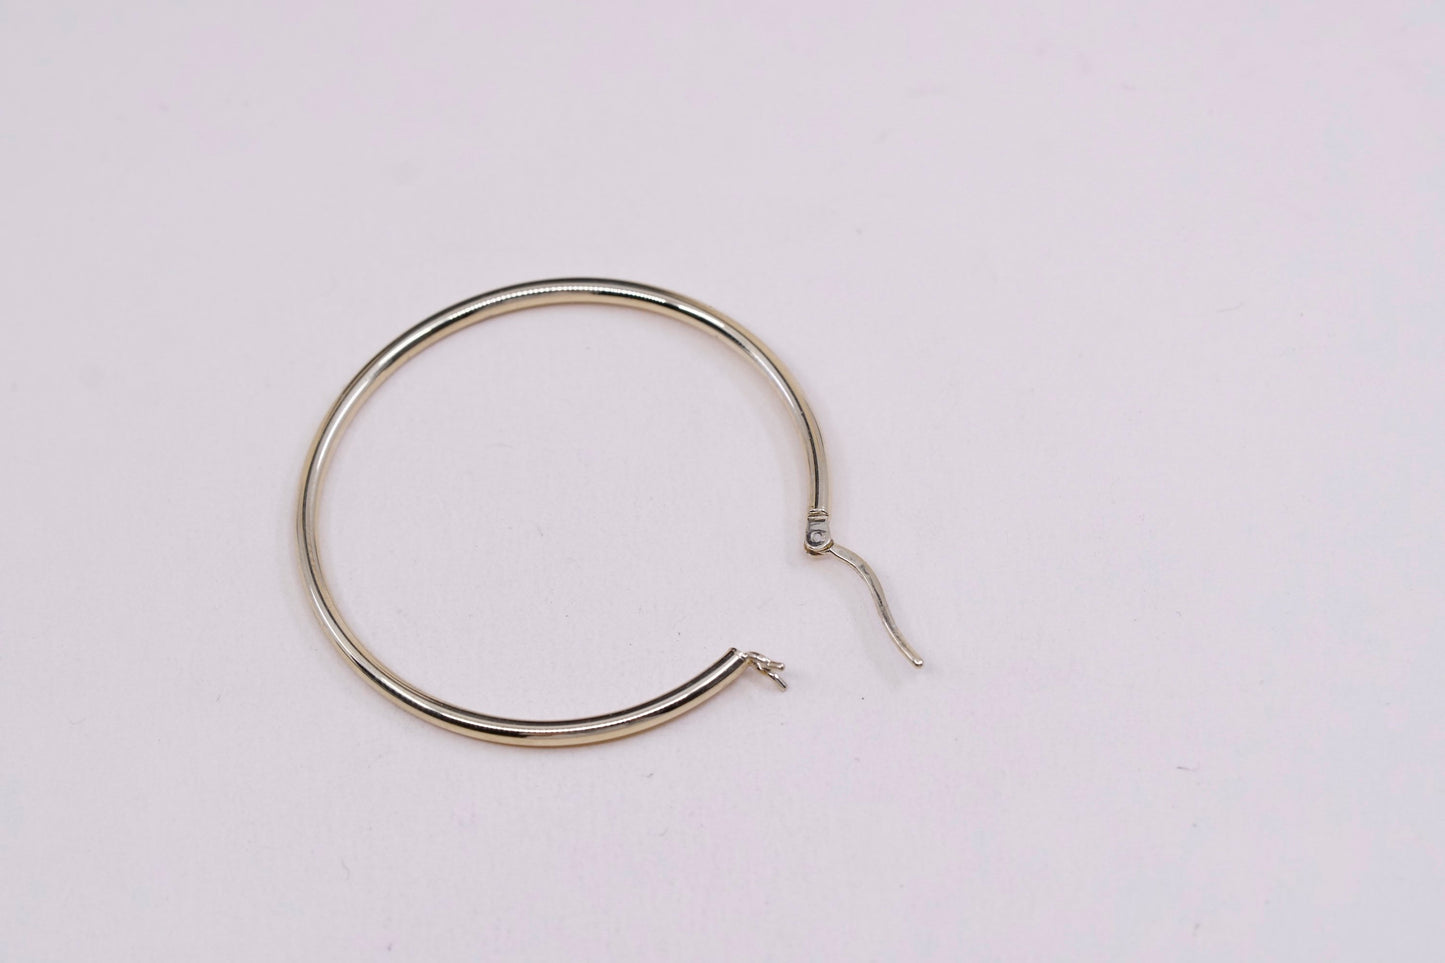 1.75” vtg vermeil gold over sterling silver earrings, minimalist hoops